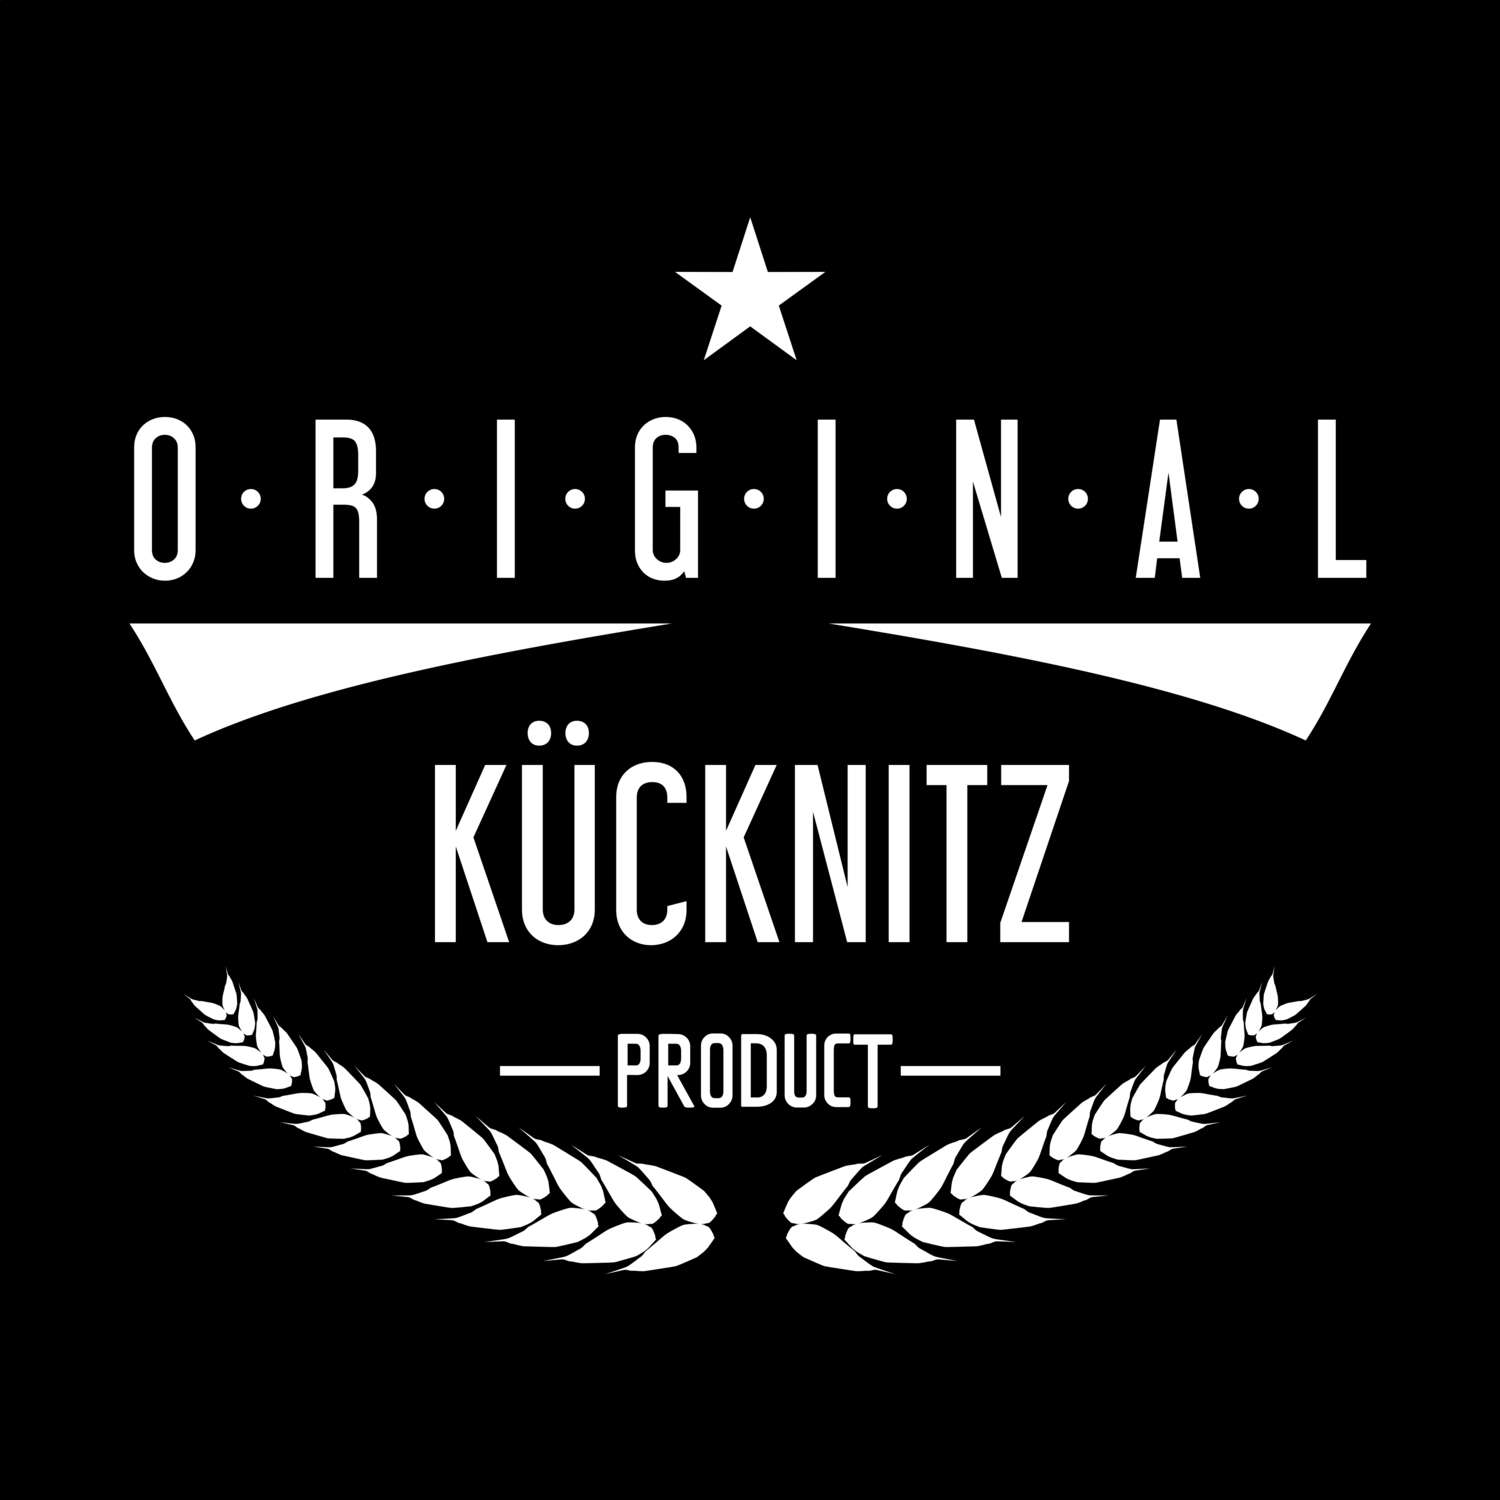 Kücknitz T-Shirt »Original Product«